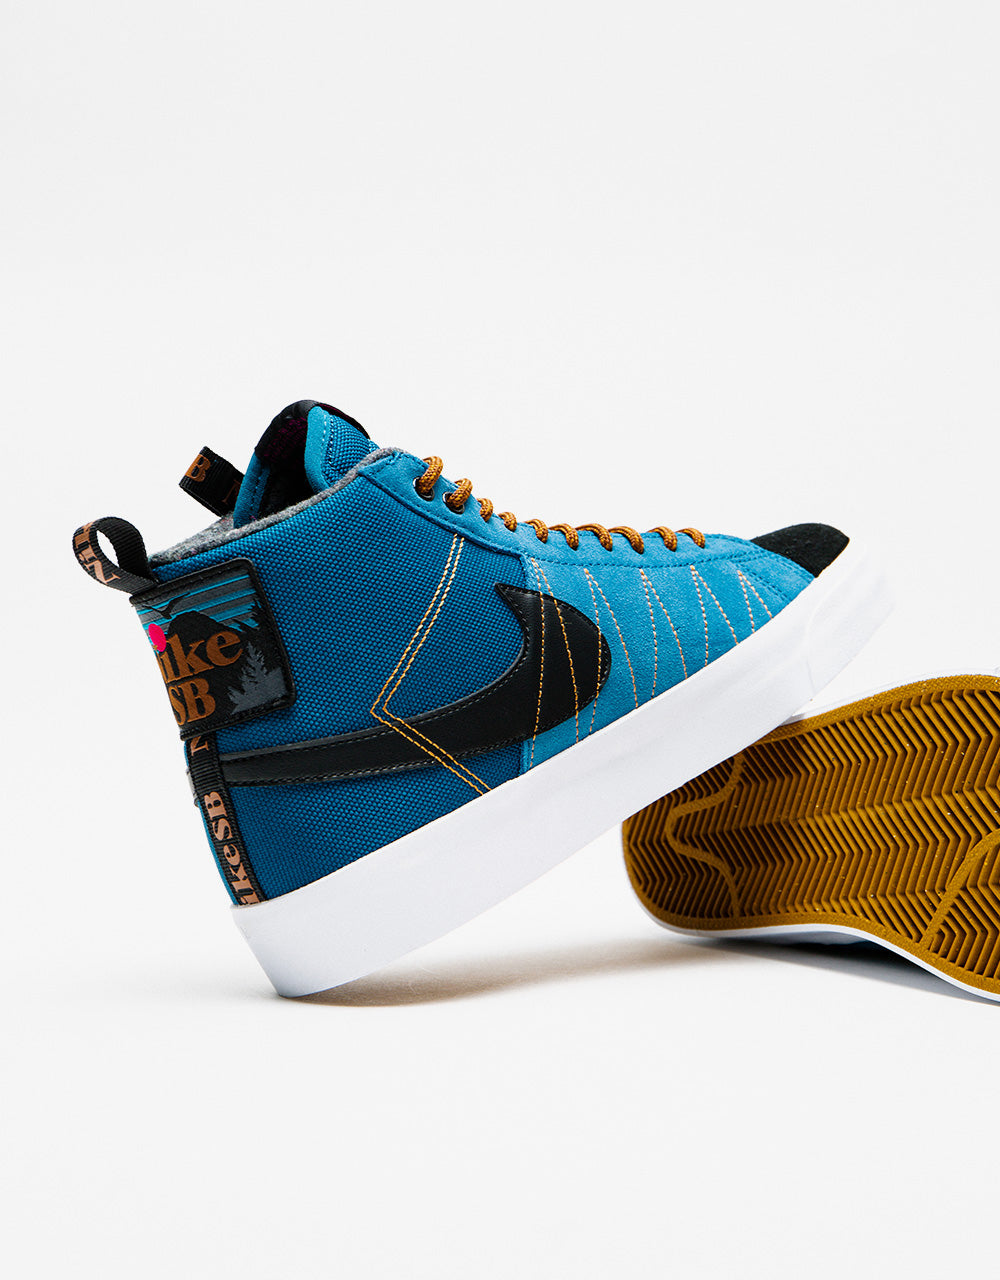 Nike SB Zoom Blazer Mid Premium Skate Shoes - Marina/Black-Pecan-Desert Ochre